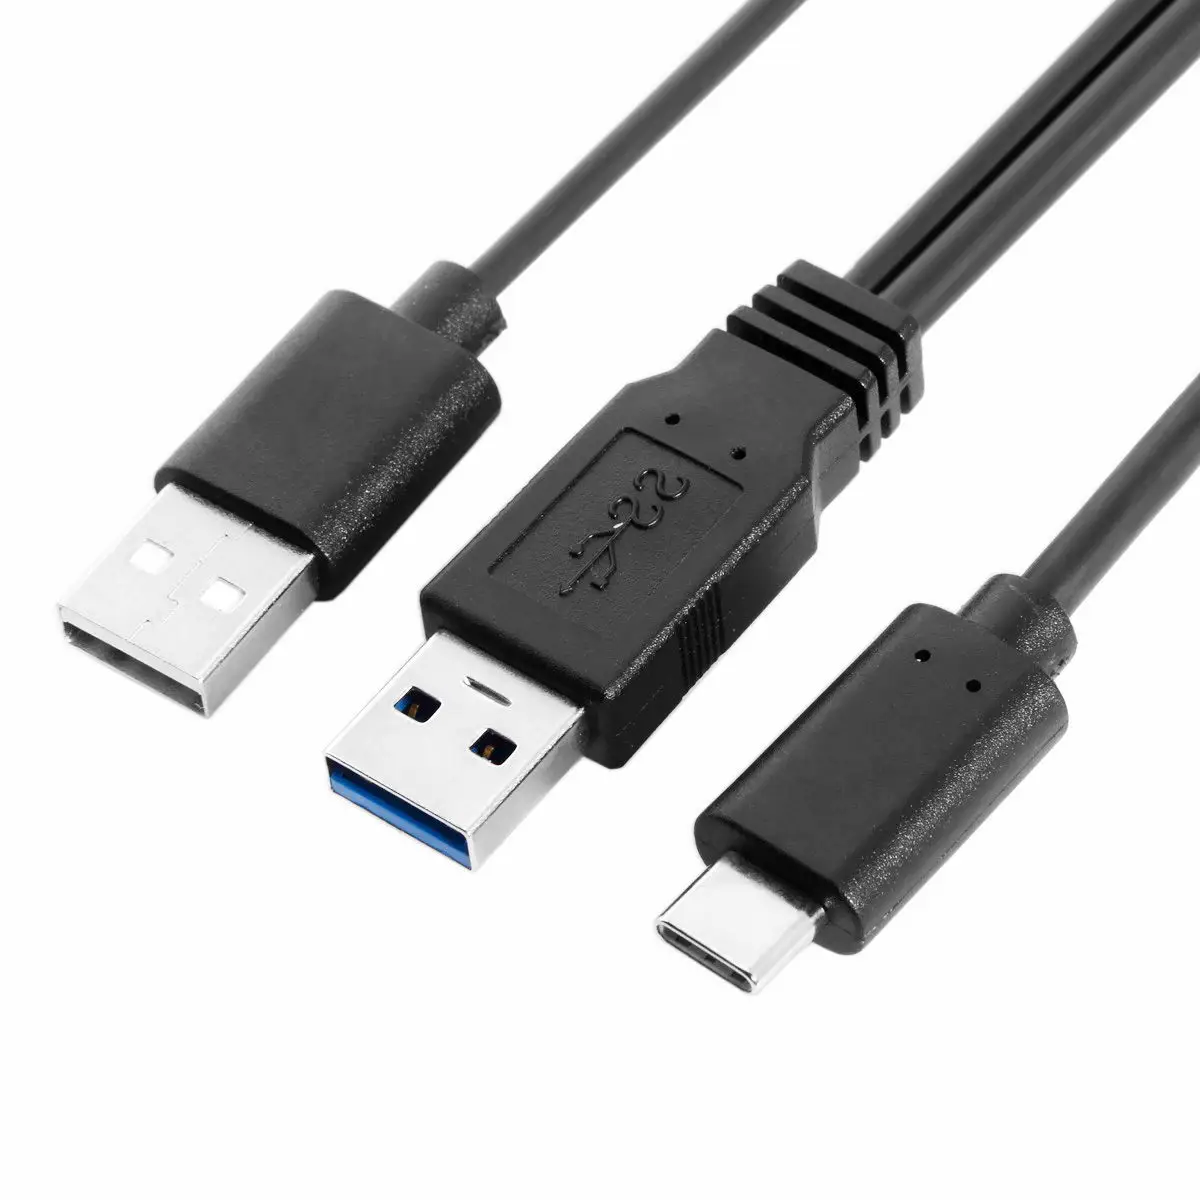 CYSM Xiwai USB 3.0 Power Podatkov Moški & USB 2.0, Dvojno Napajanje USB-C Tip-C Y Kabel Kabel za Lap top & Trdi Disk 60 cm Črni